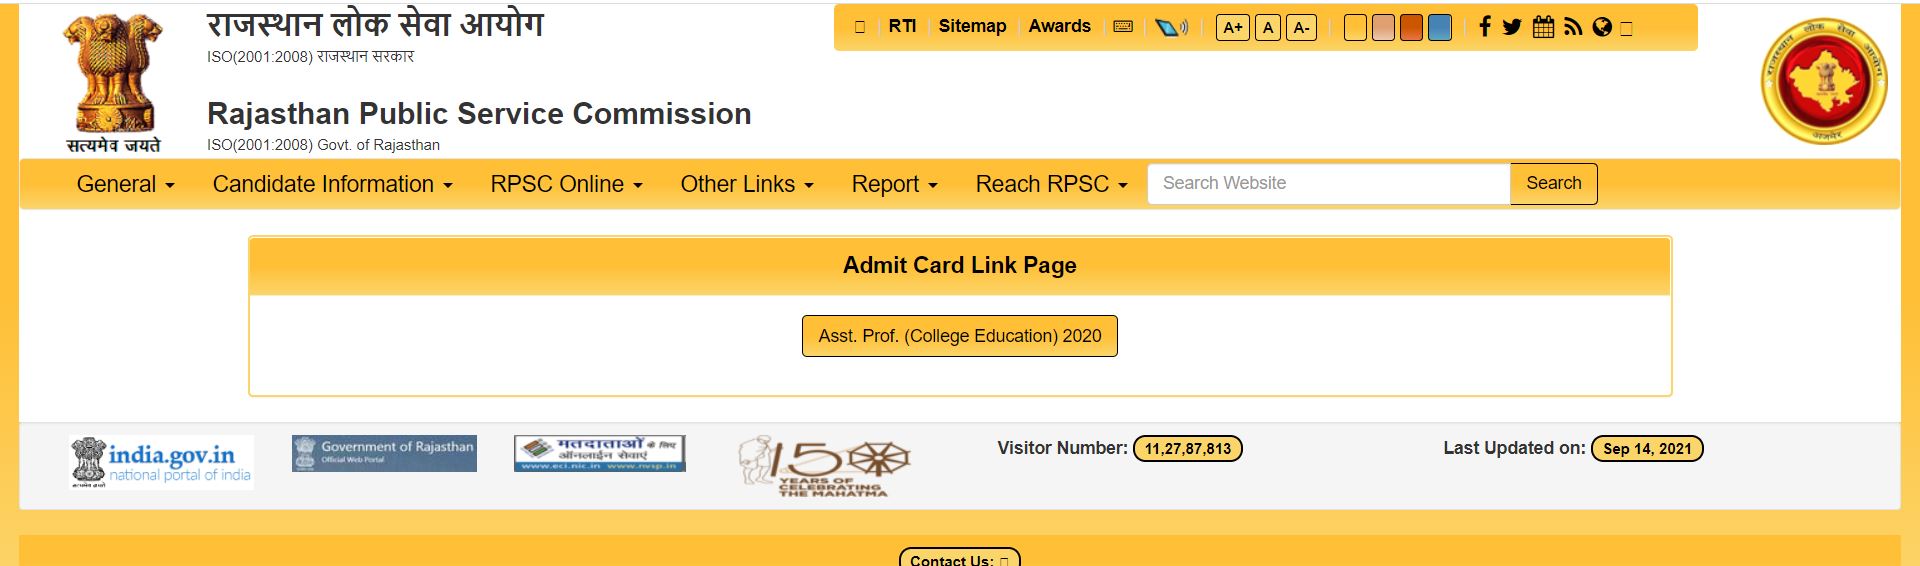 RPSC Assistant Professor Admit Card 2021